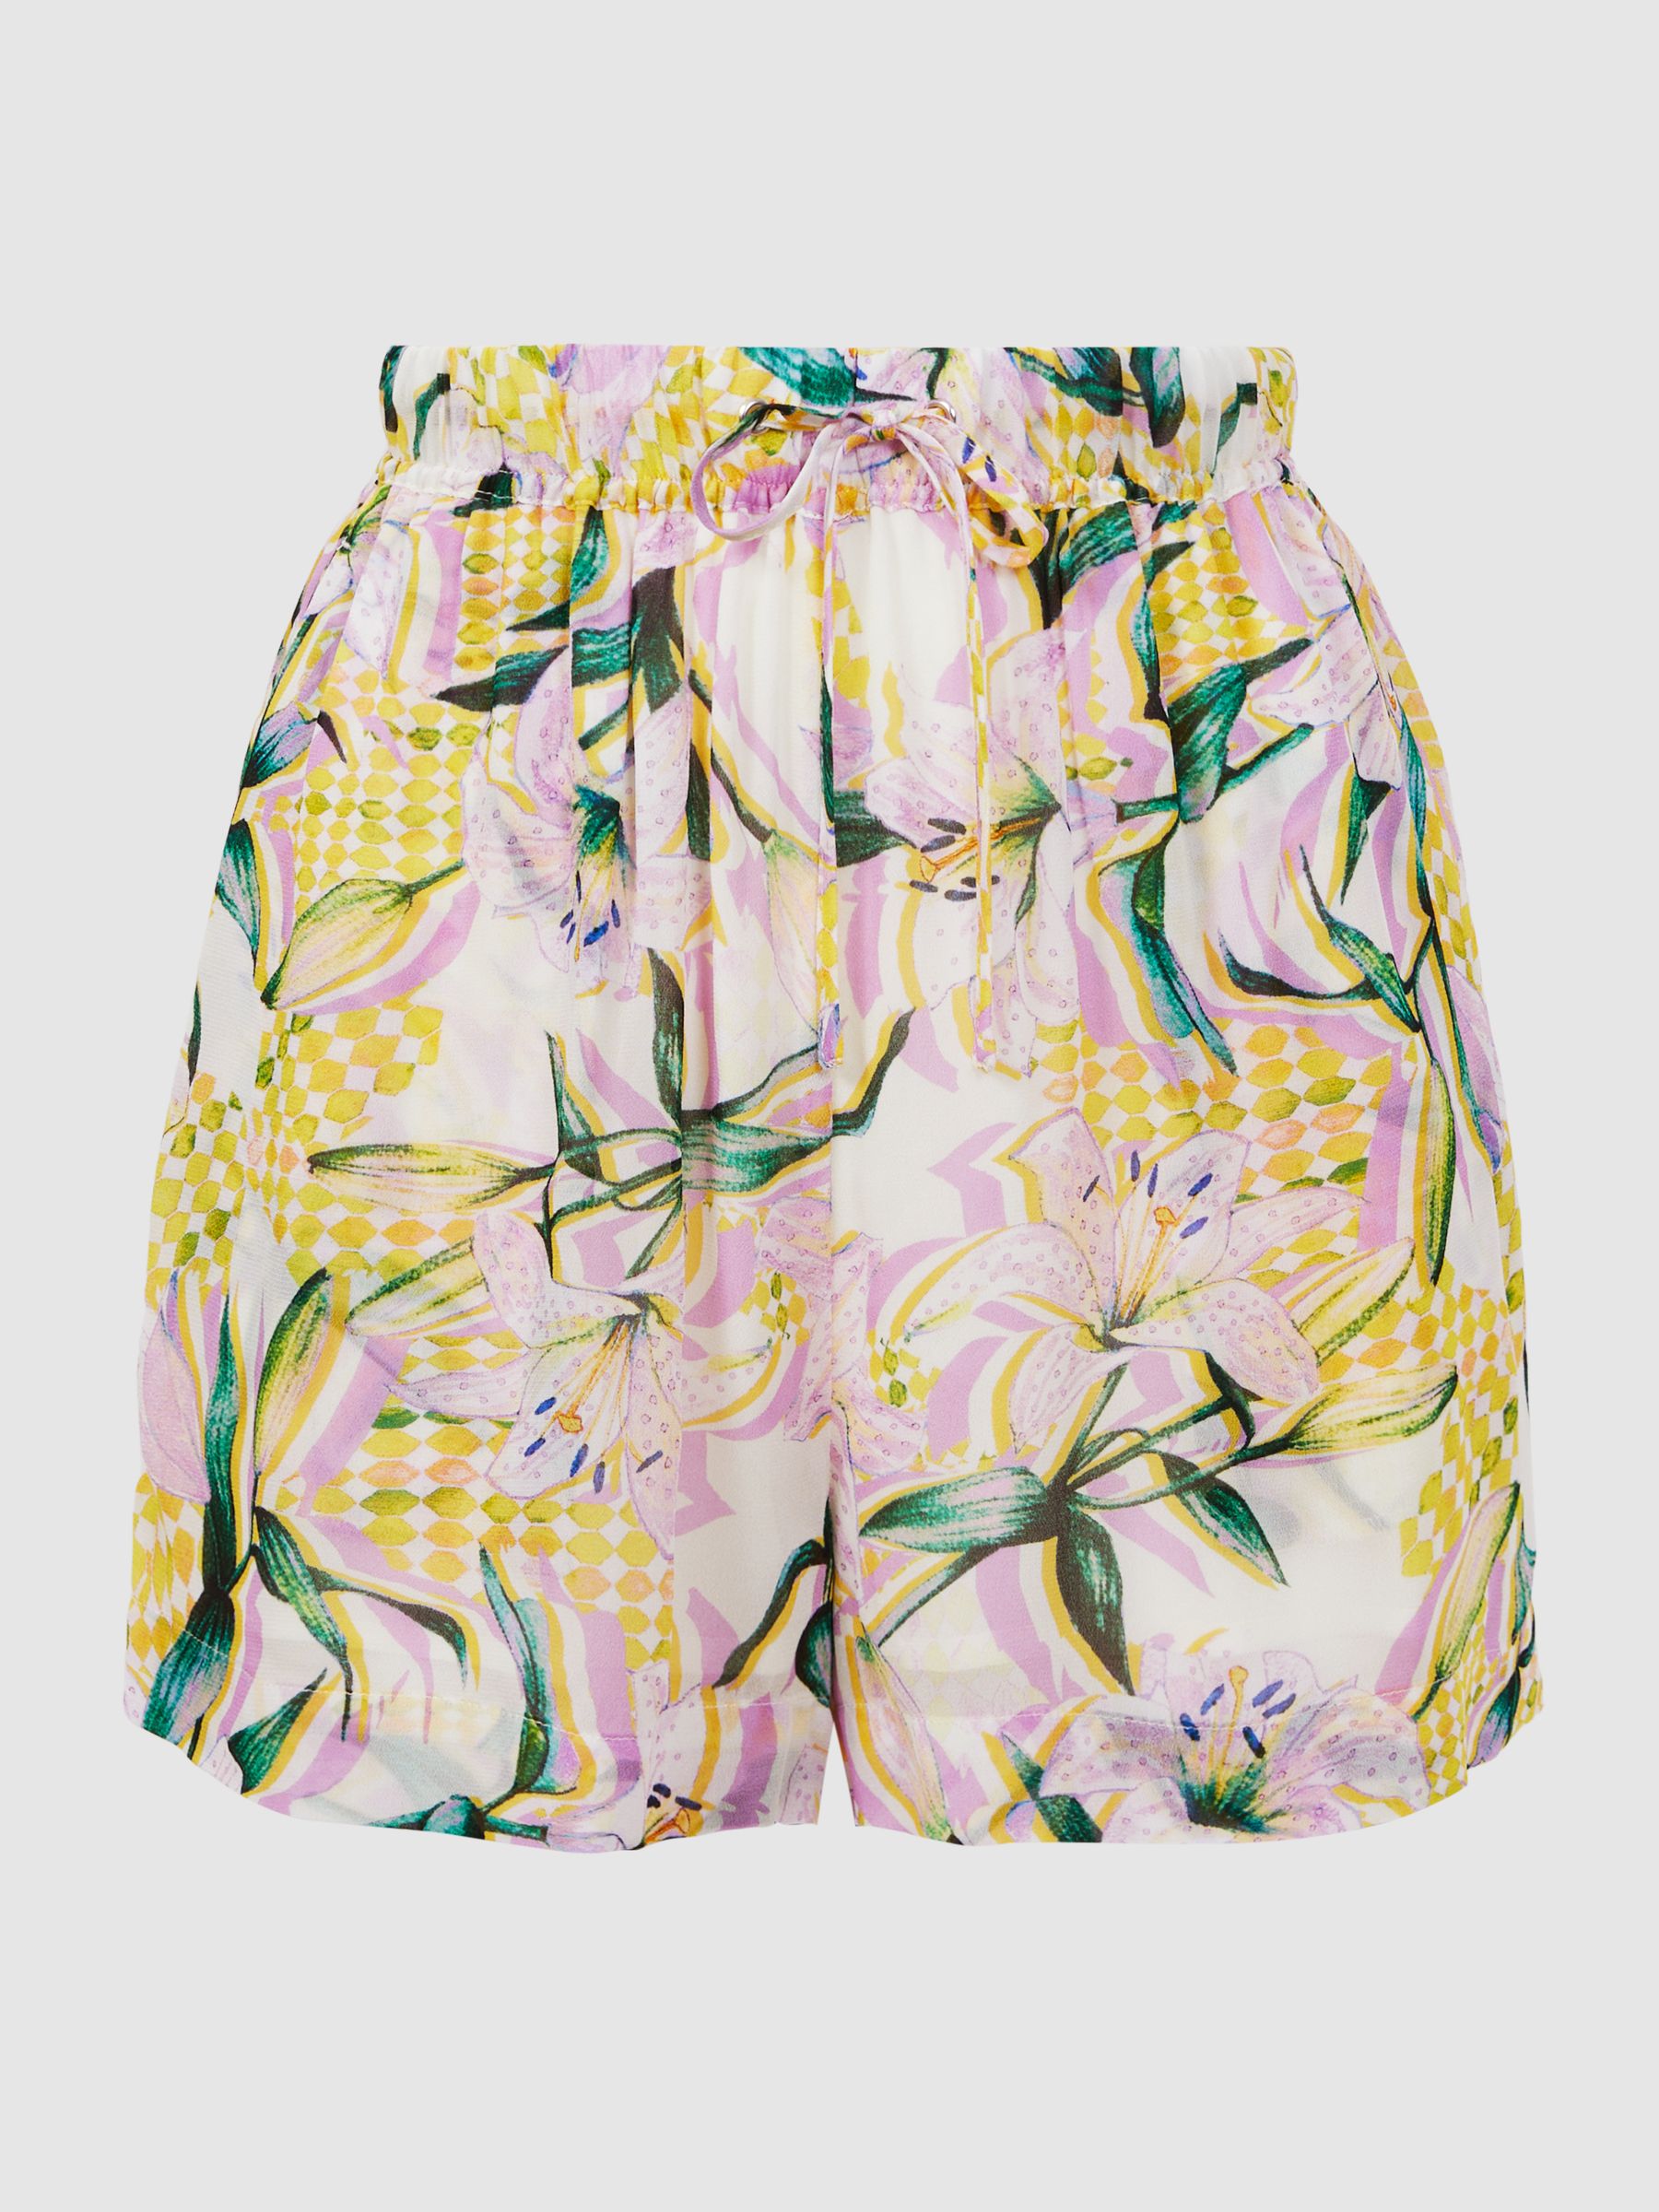 Reiss Anja Floral Print Drawstring Shorts | REISS USA